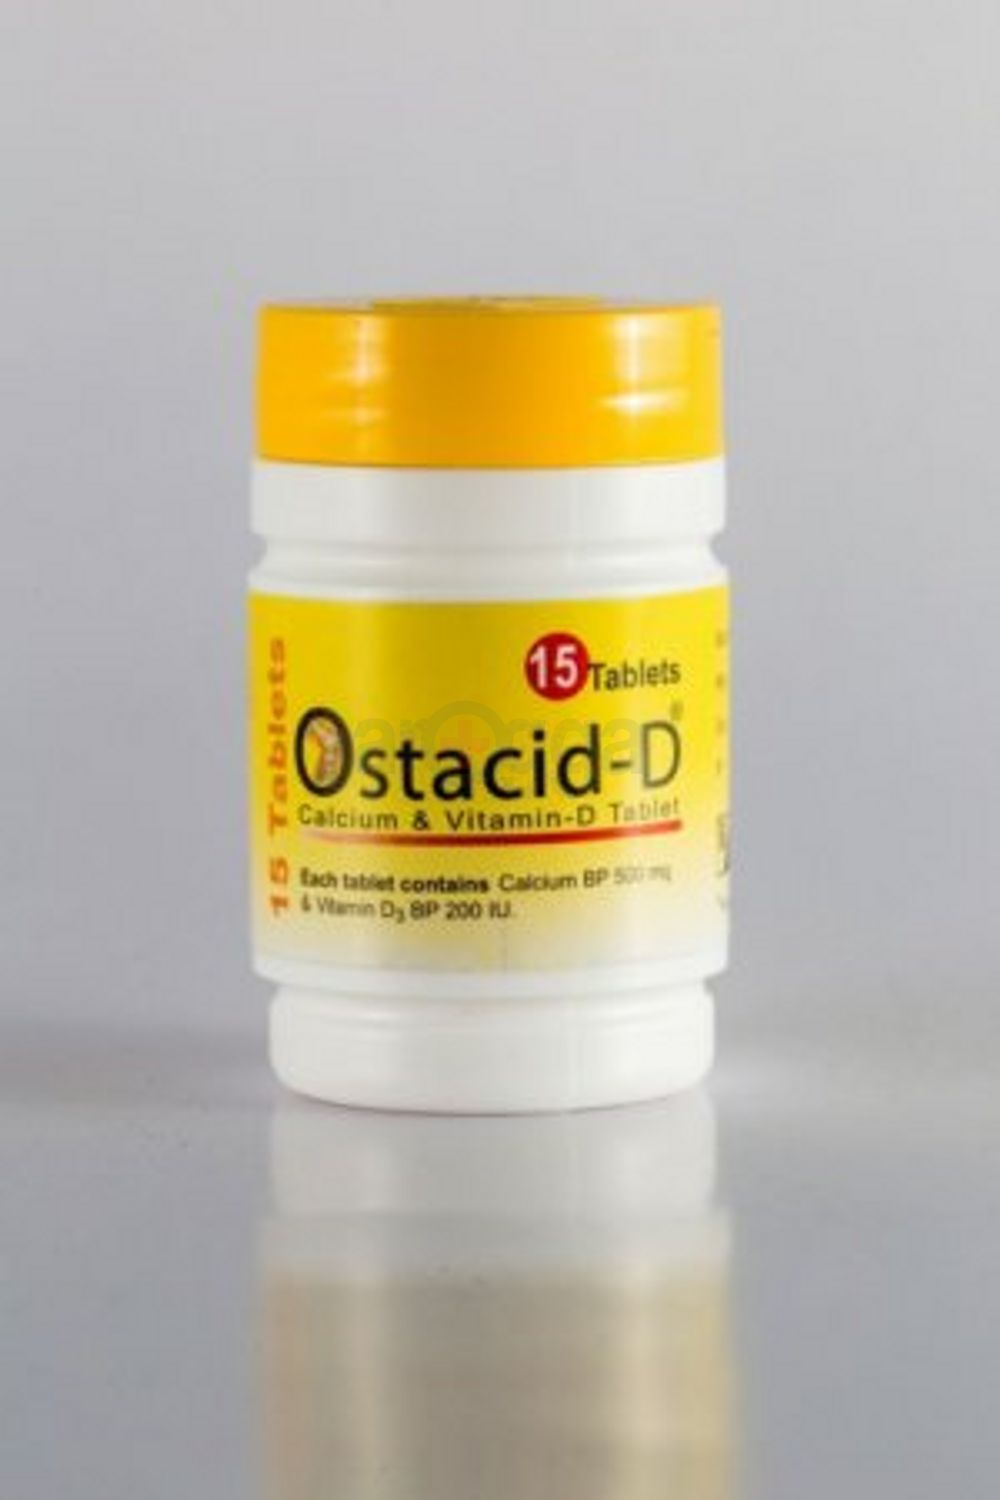 Ostacid-D